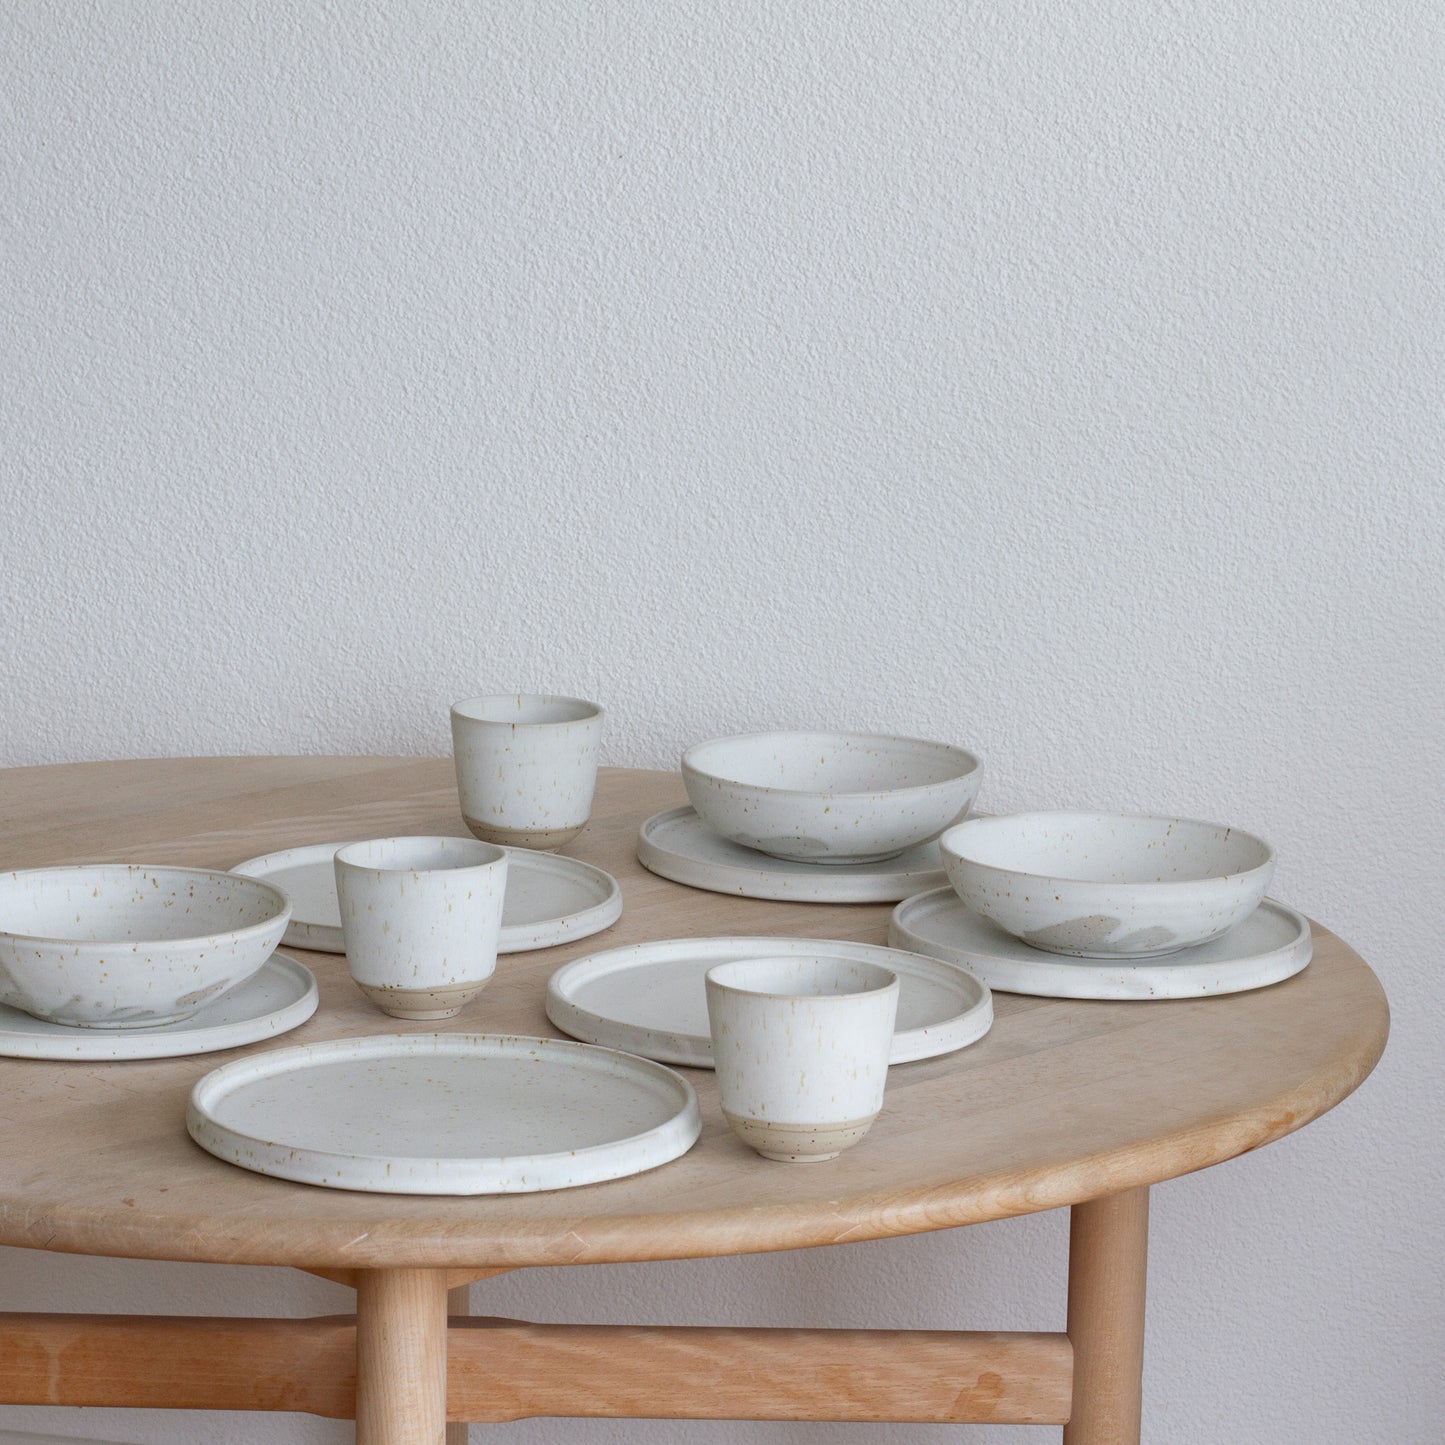 Handmade ceramic Plate -Large